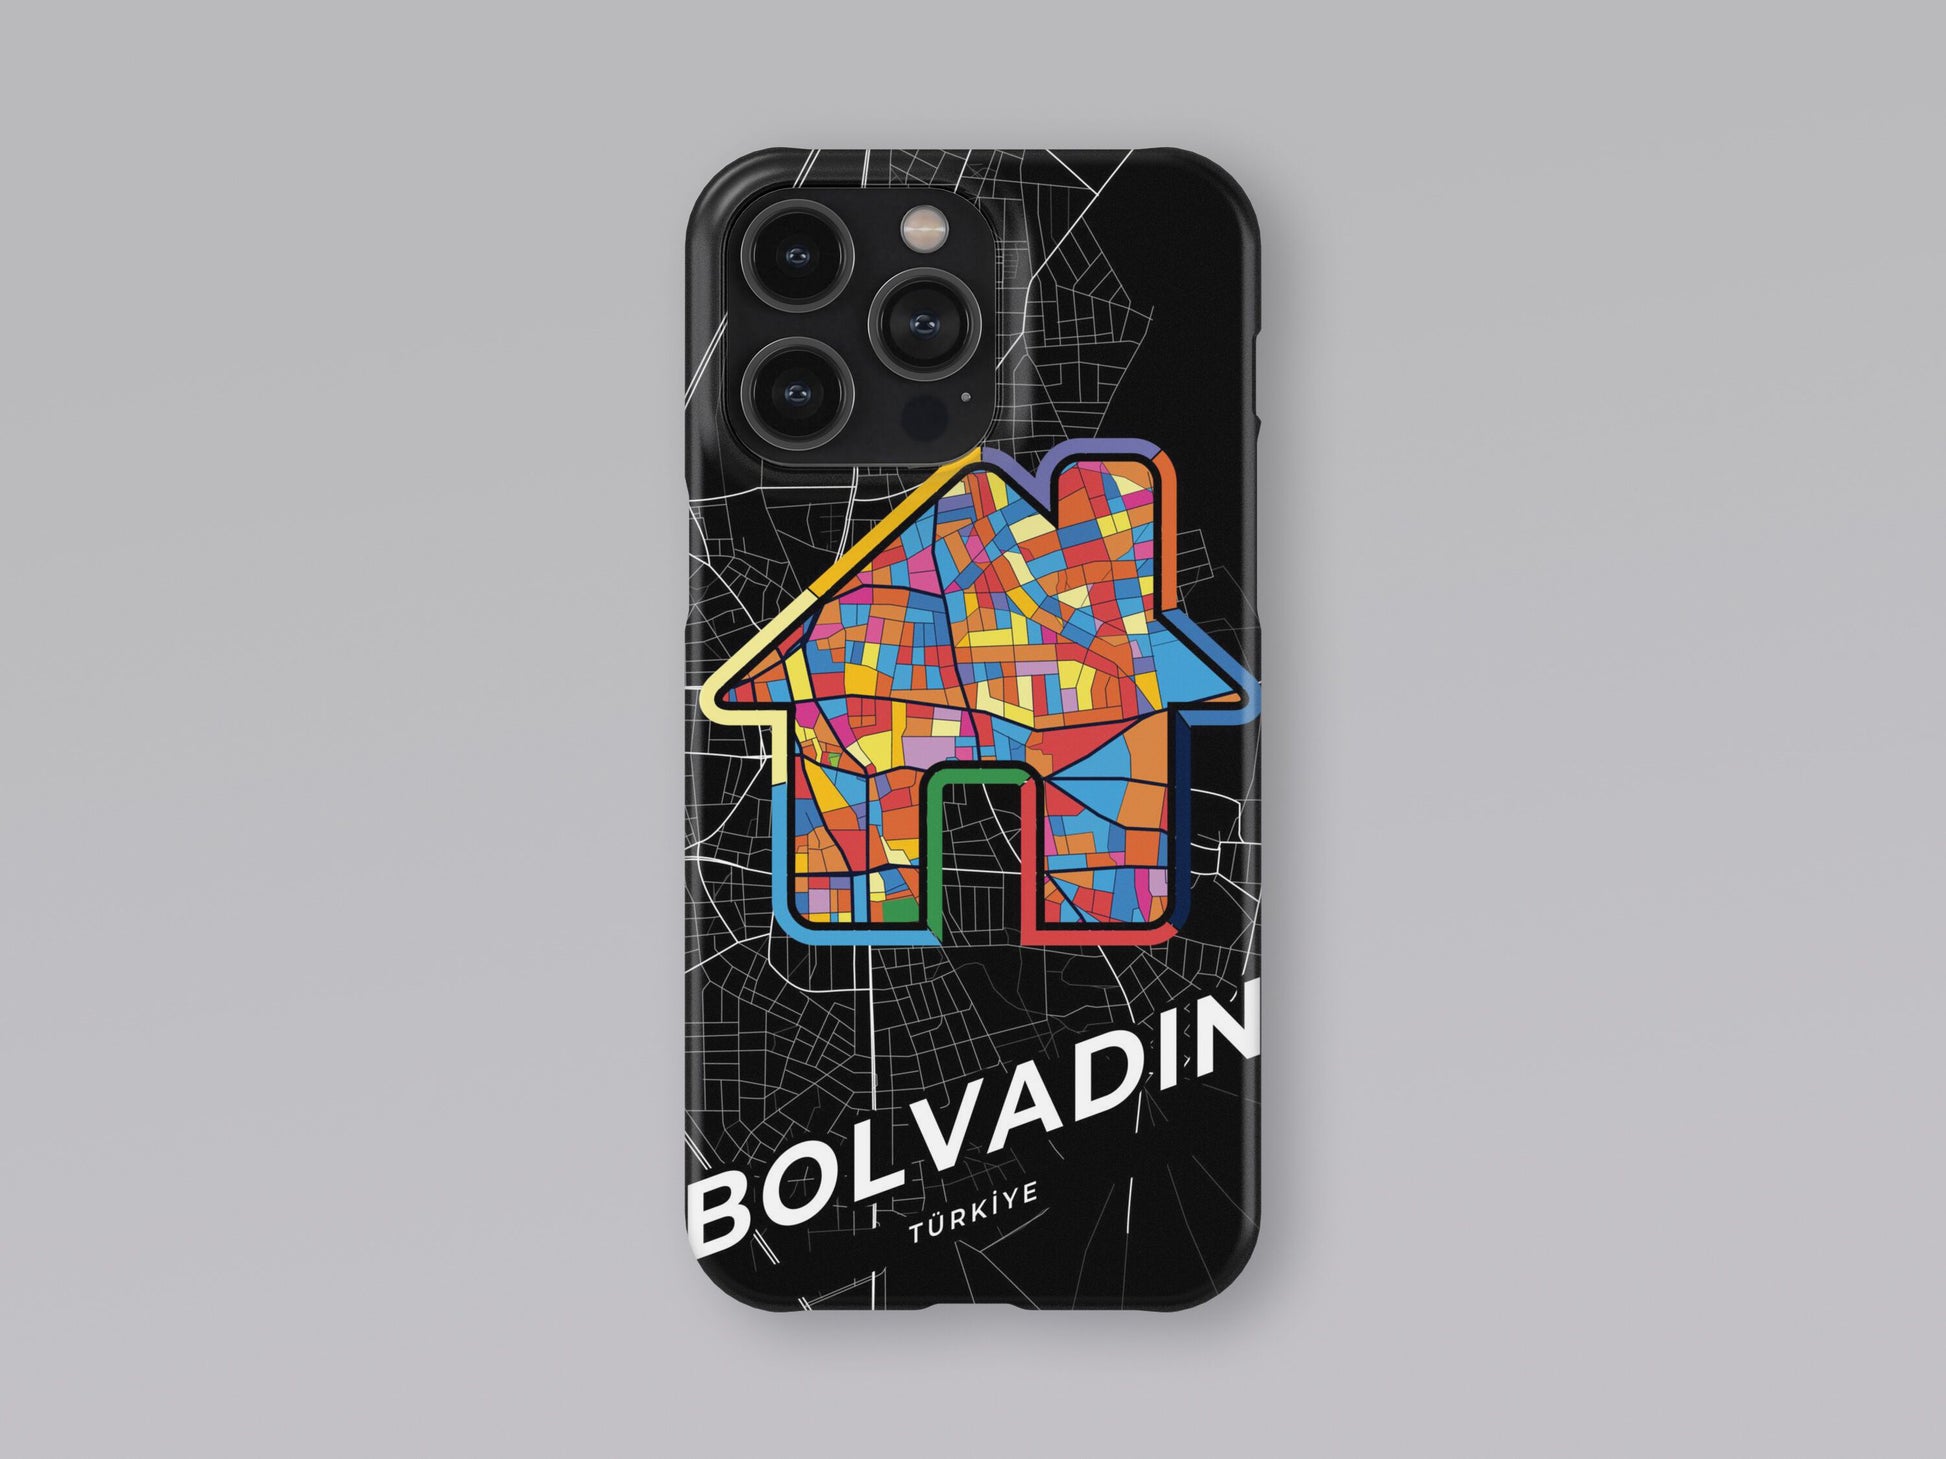 Bolvadin Turkey slim phone case with colorful icon. Birthday, wedding or housewarming gift. Couple match cases. 3